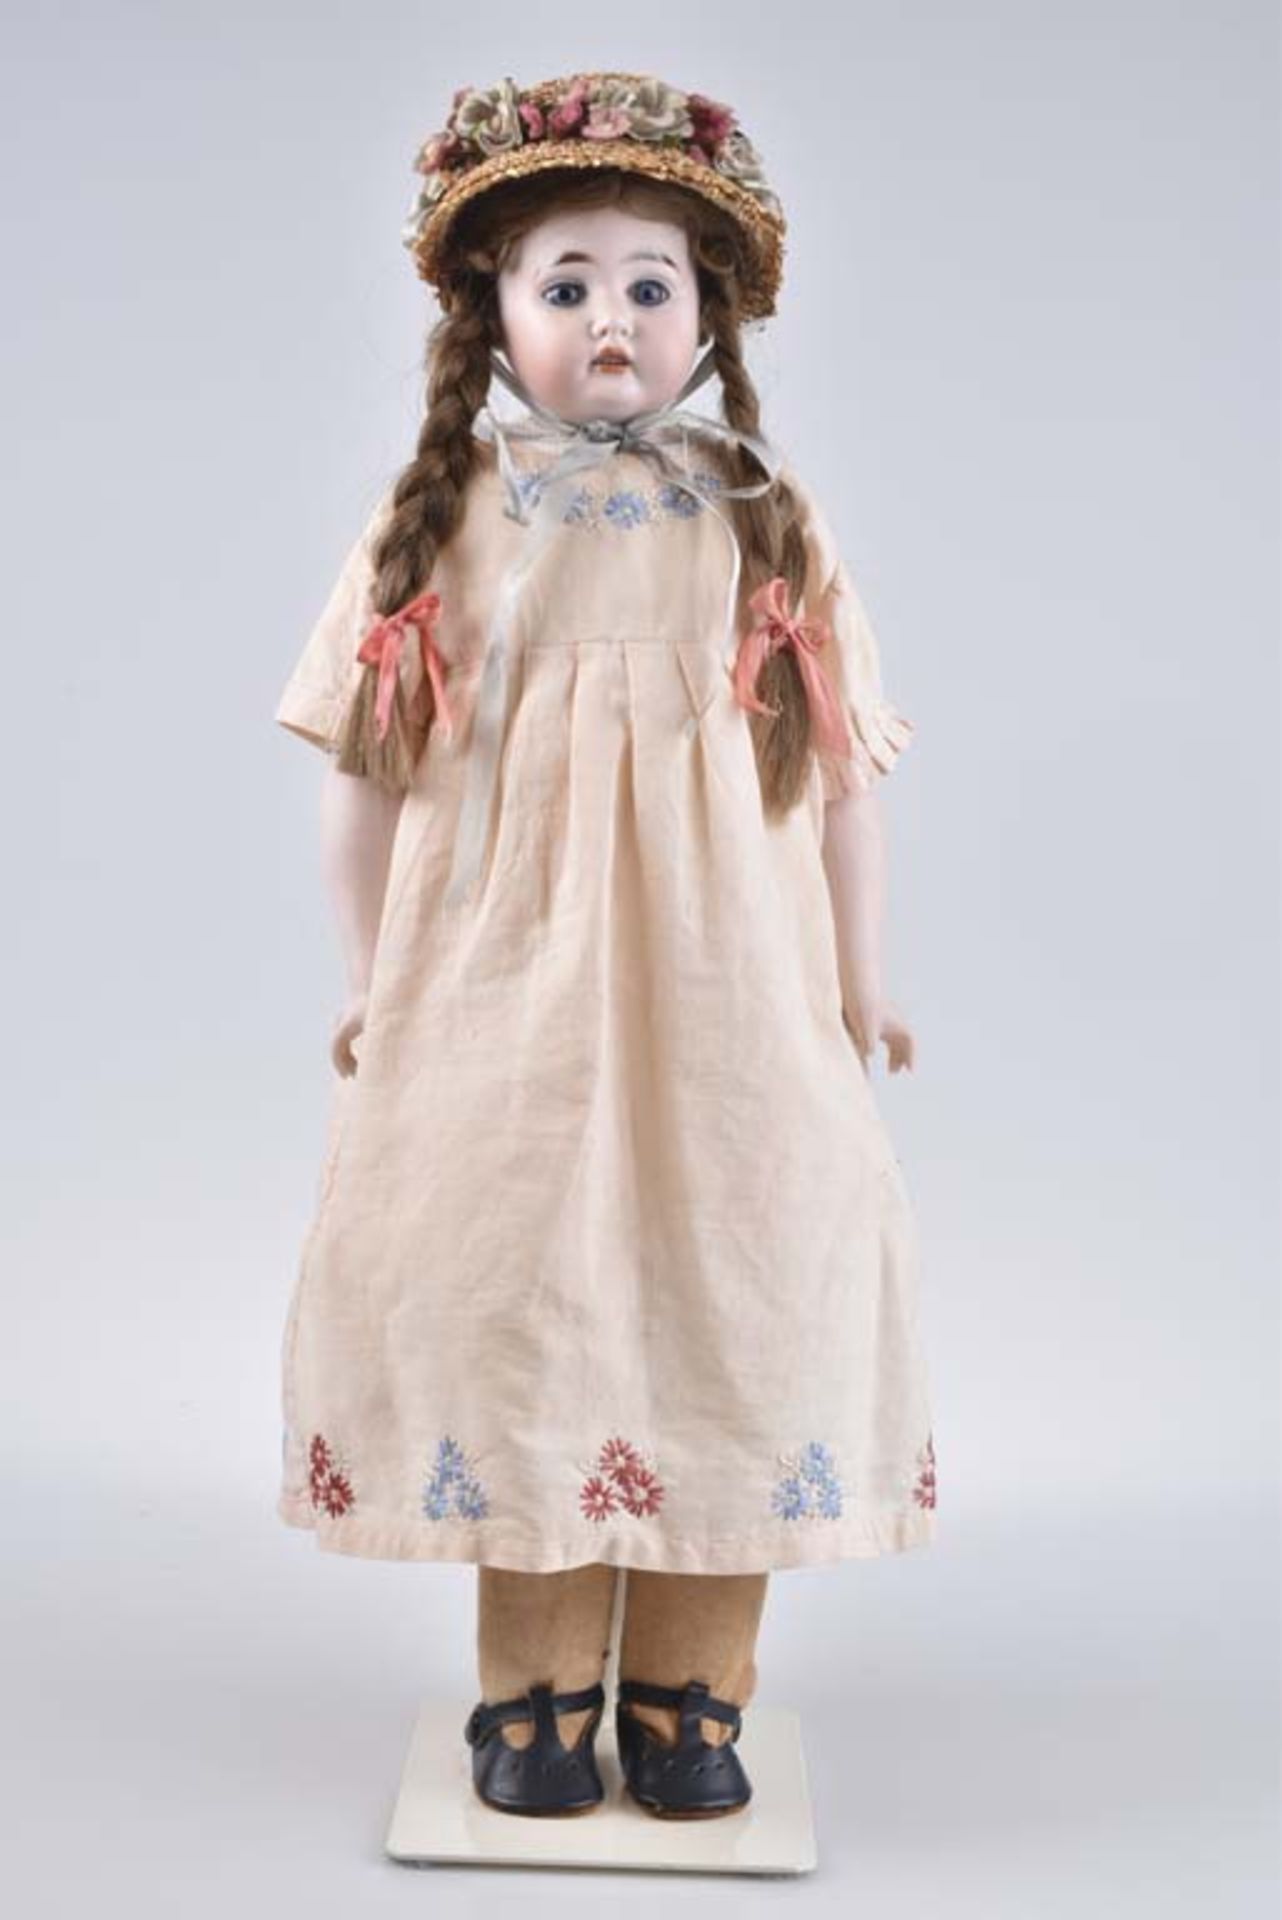 ARMAND MARSEILLE Porzellan-Brustblattkopf-Puppe Ab 1896, gem. 3200 AM 1 DEP Made in Ge